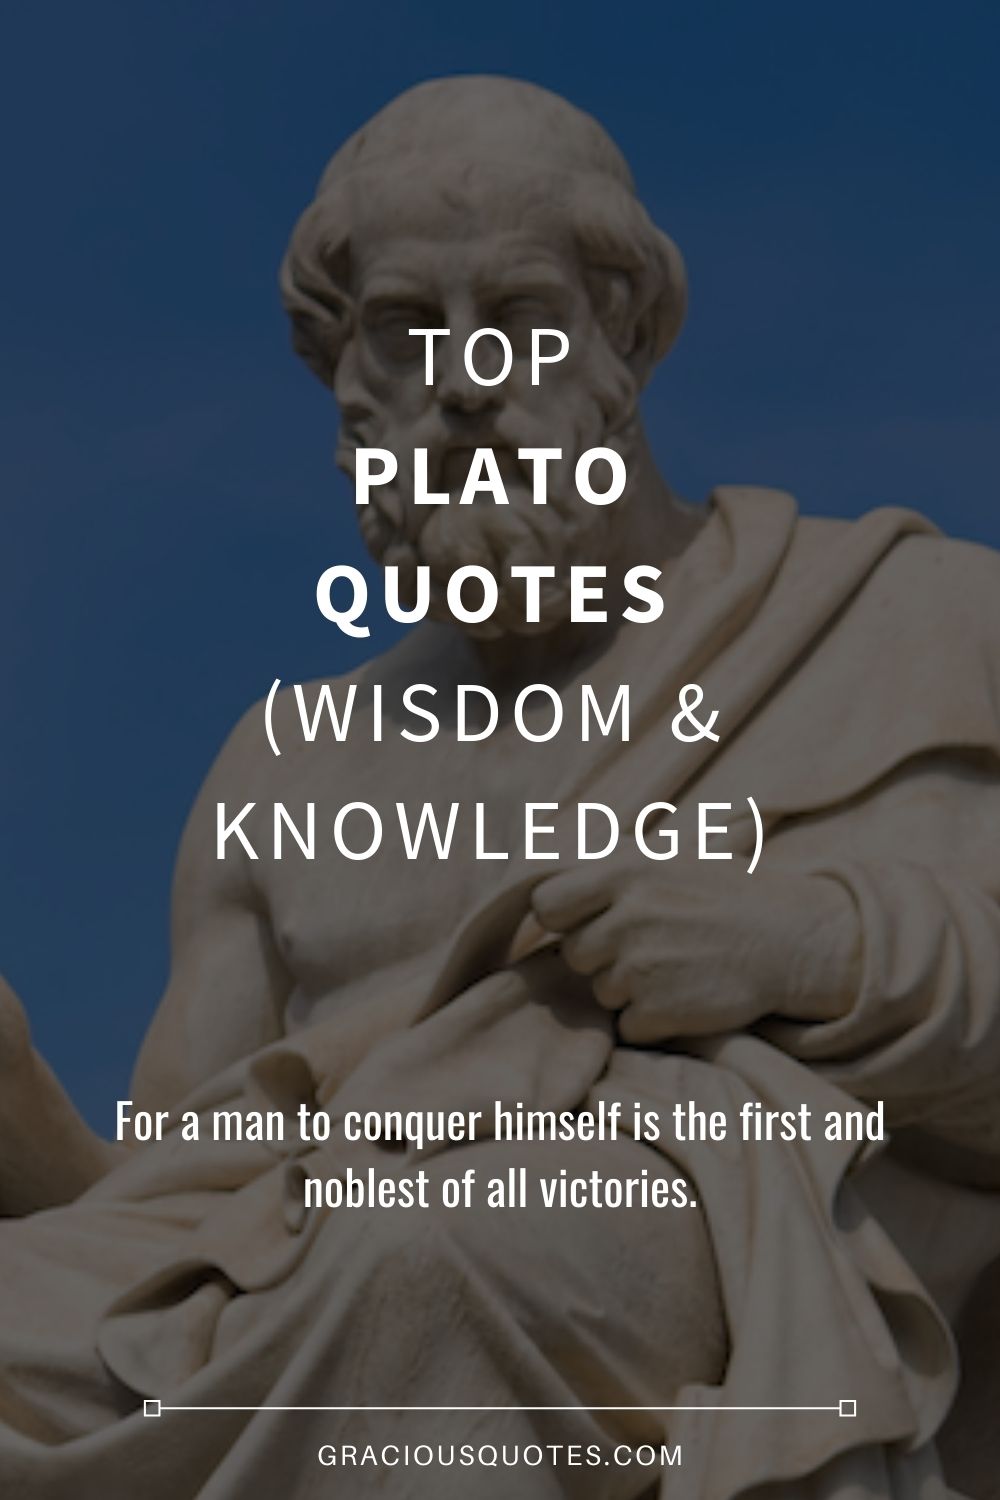 Top Plato Quotes (WISDOM & KNOWLEDGE) - Gracious Quotes